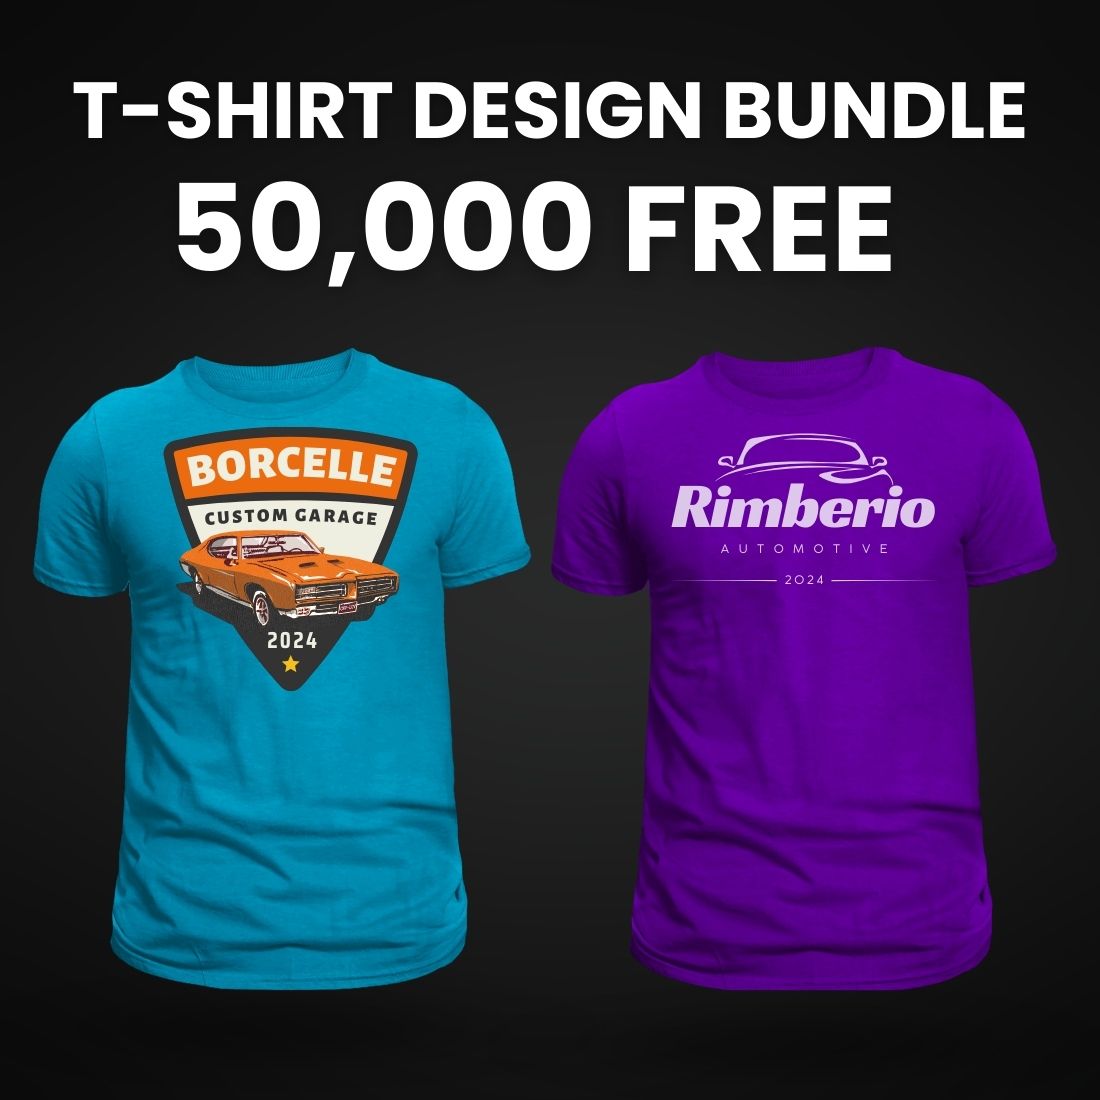 50,000+ Editable T-Shirt Designs Mega Bundle cover image.